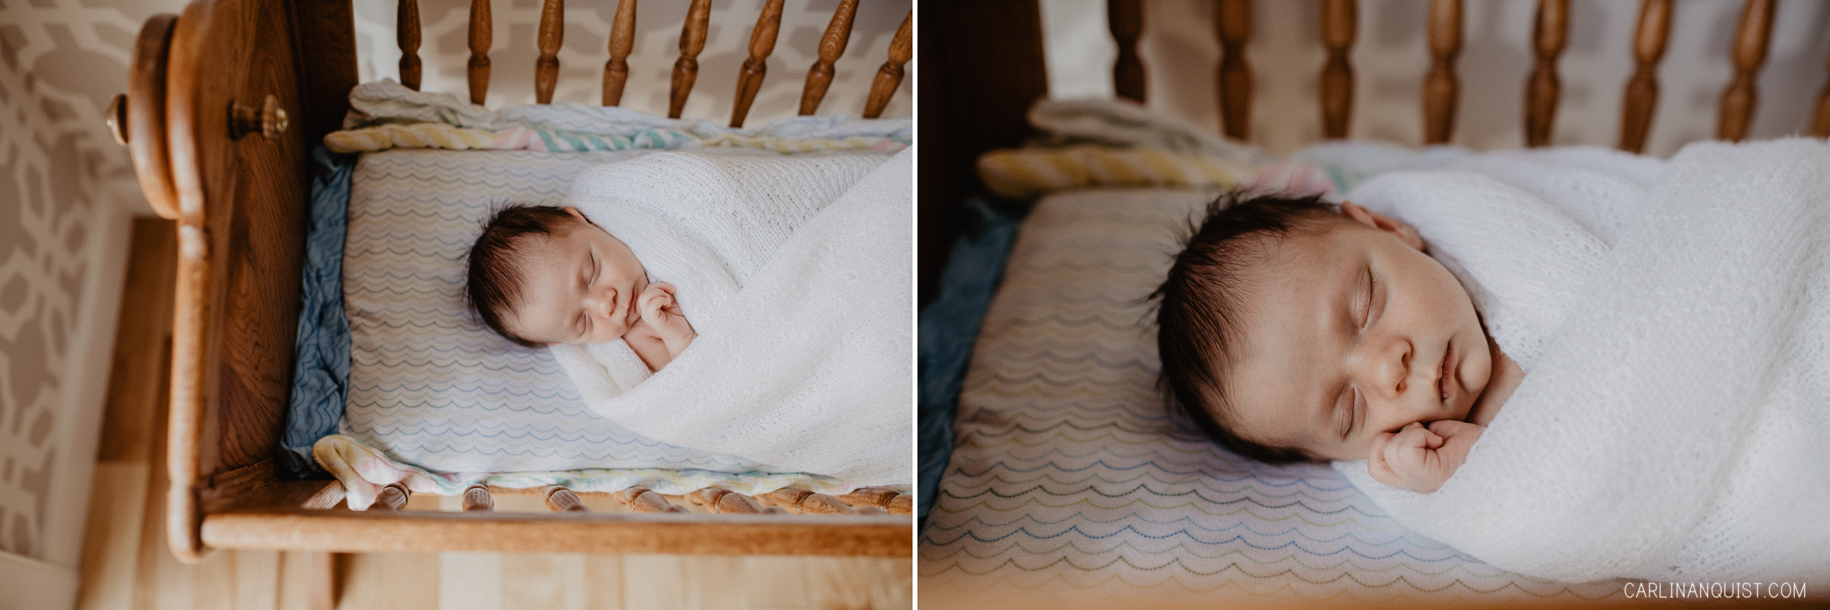 Newborn Boy in Handmade Cradle